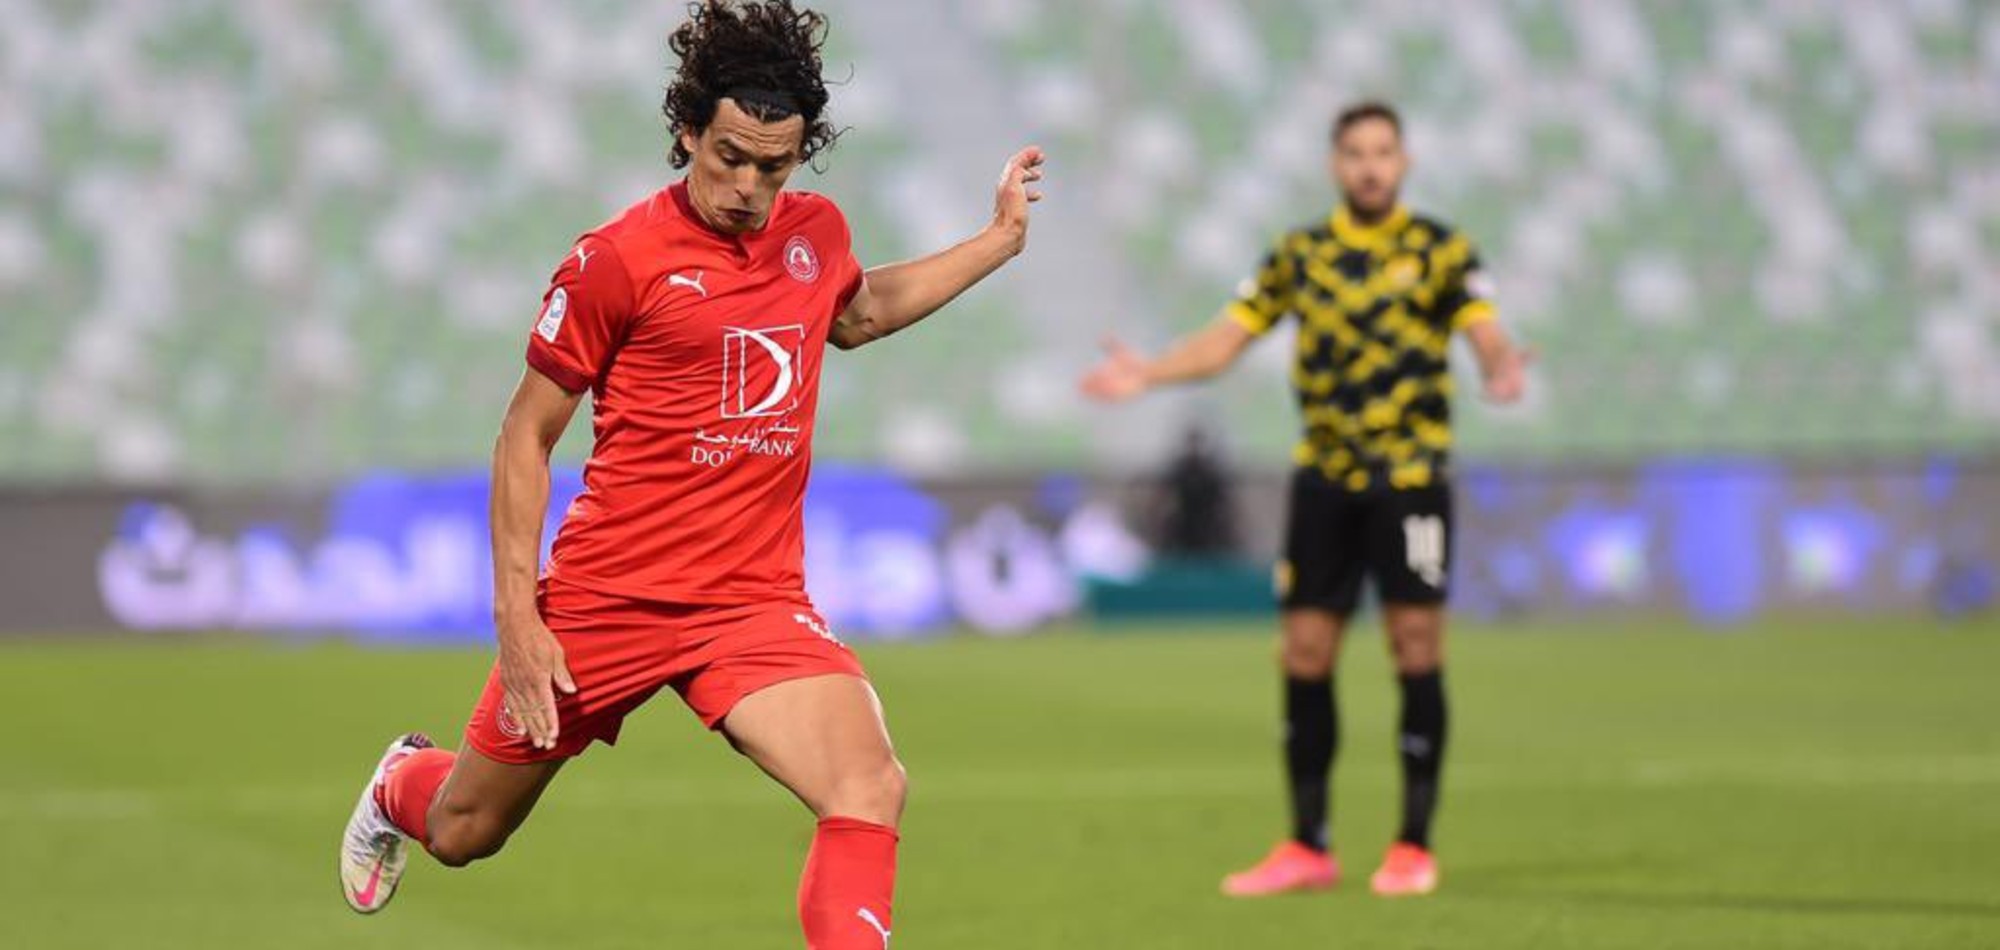  Sebastian Soria departs from Al Arabi SC with a possible move to Qatar SC